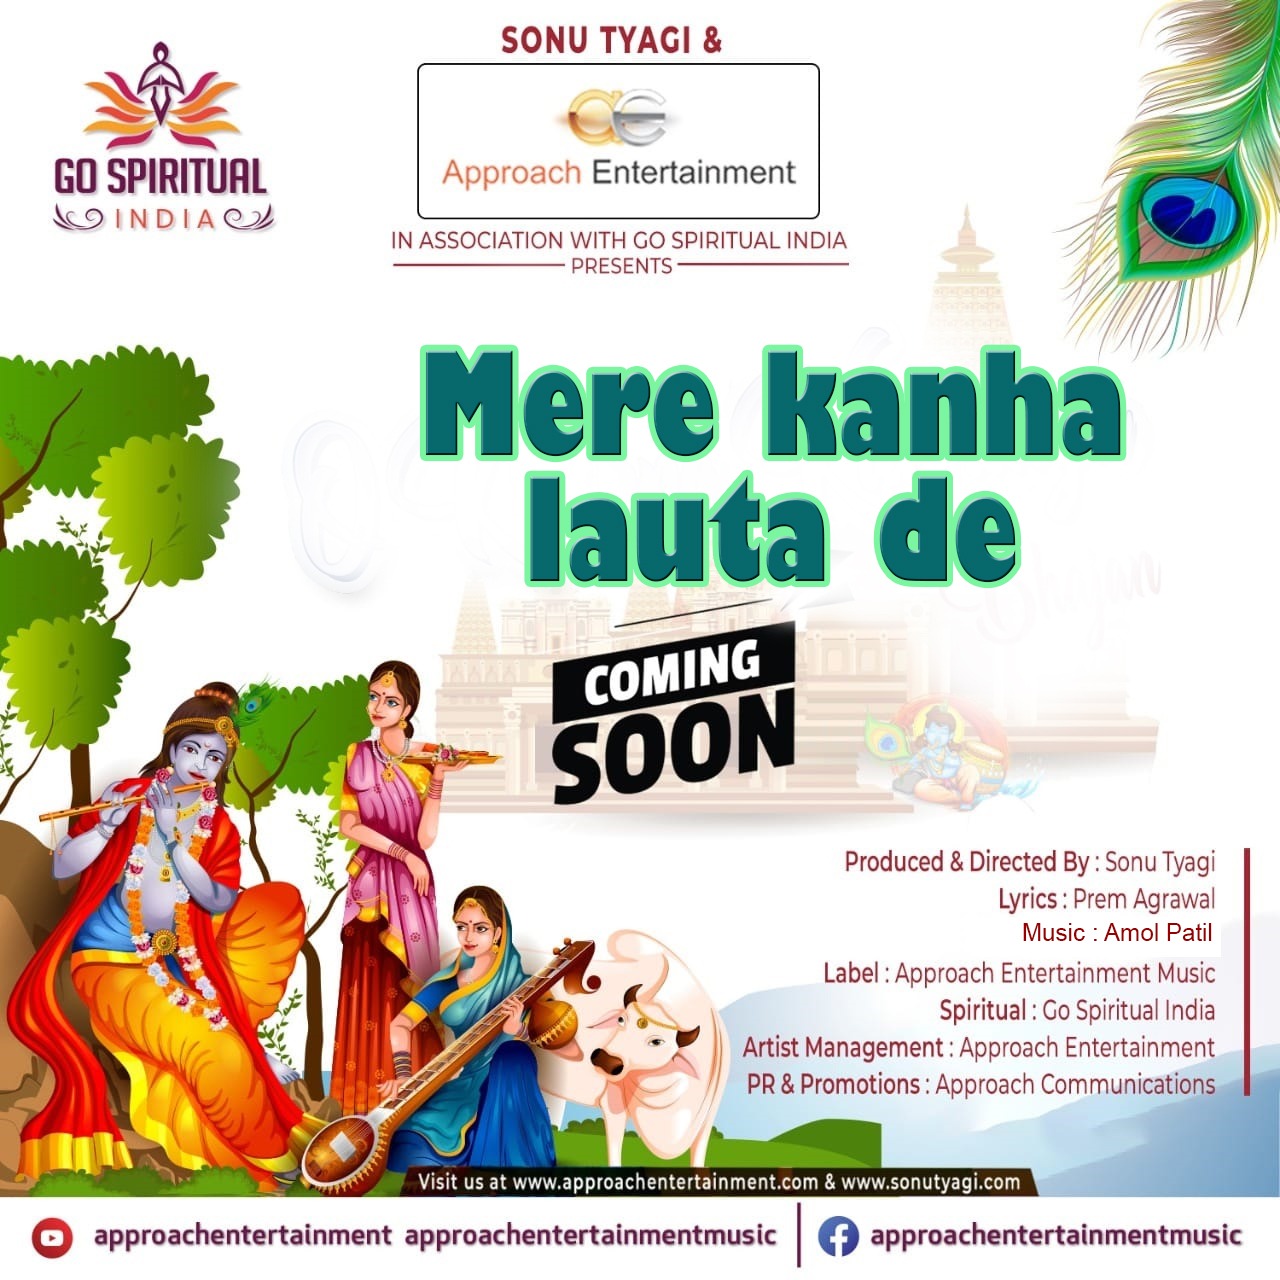 Go Spiritual India, Approach Entertainment to Launch Krishna Bhajan ‘ Mere Kanha Lauta De’